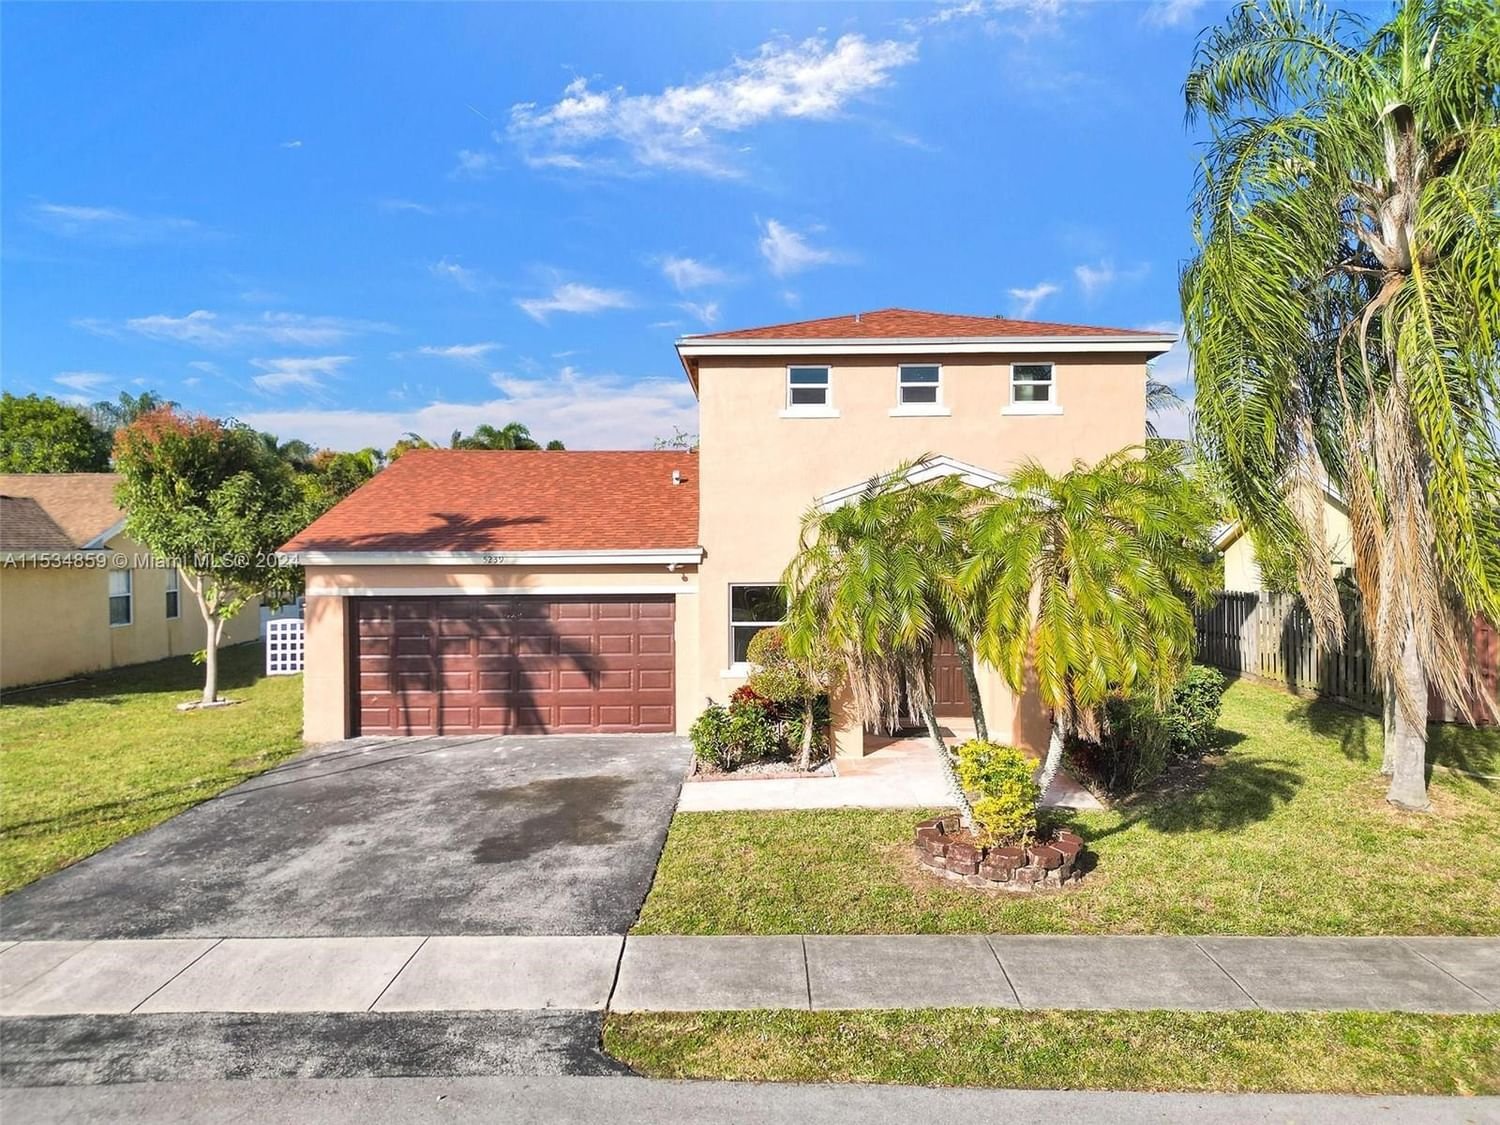 Real estate property located at 5239 96th Ave, Broward County, BANYAN ESTATES, Sunrise, FL